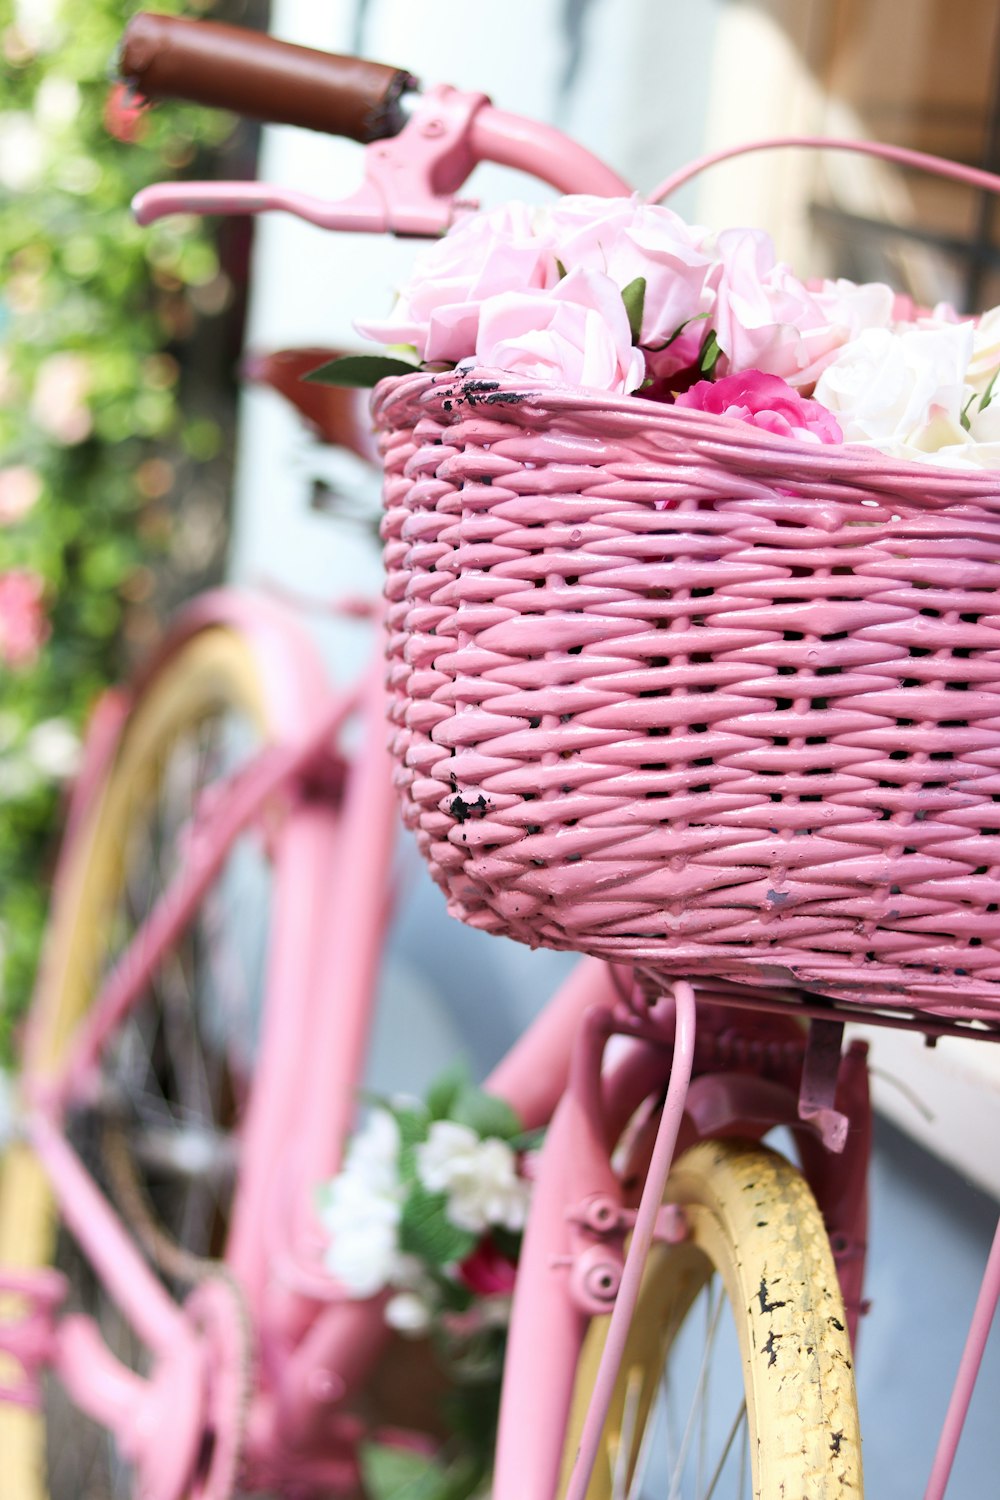 pink woven basket on yellow bicycle